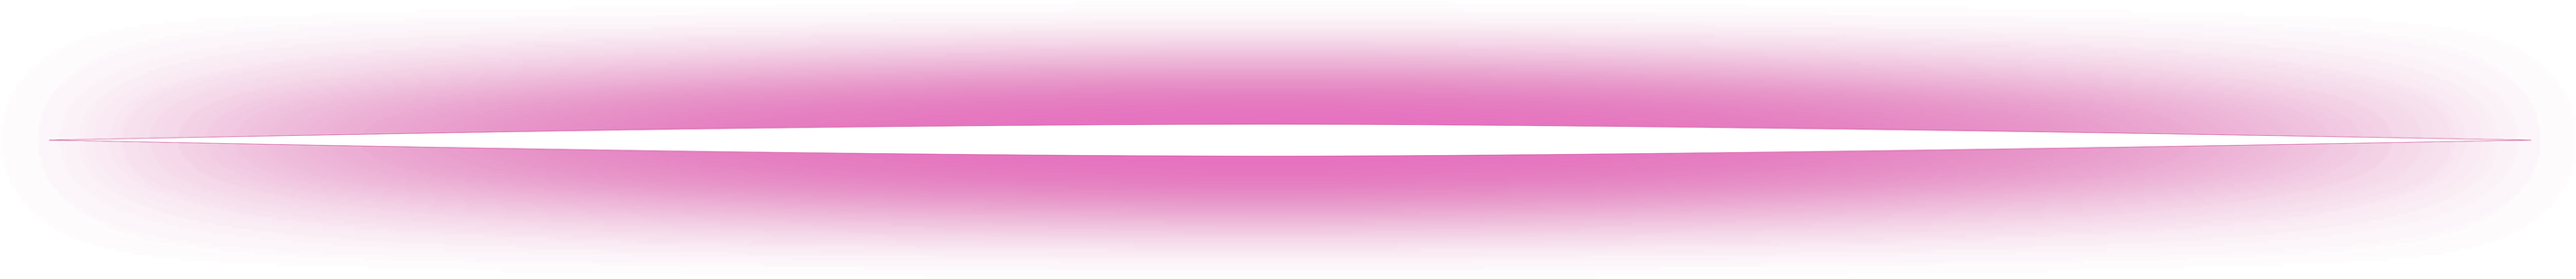 Pink Neon Thin Line Border